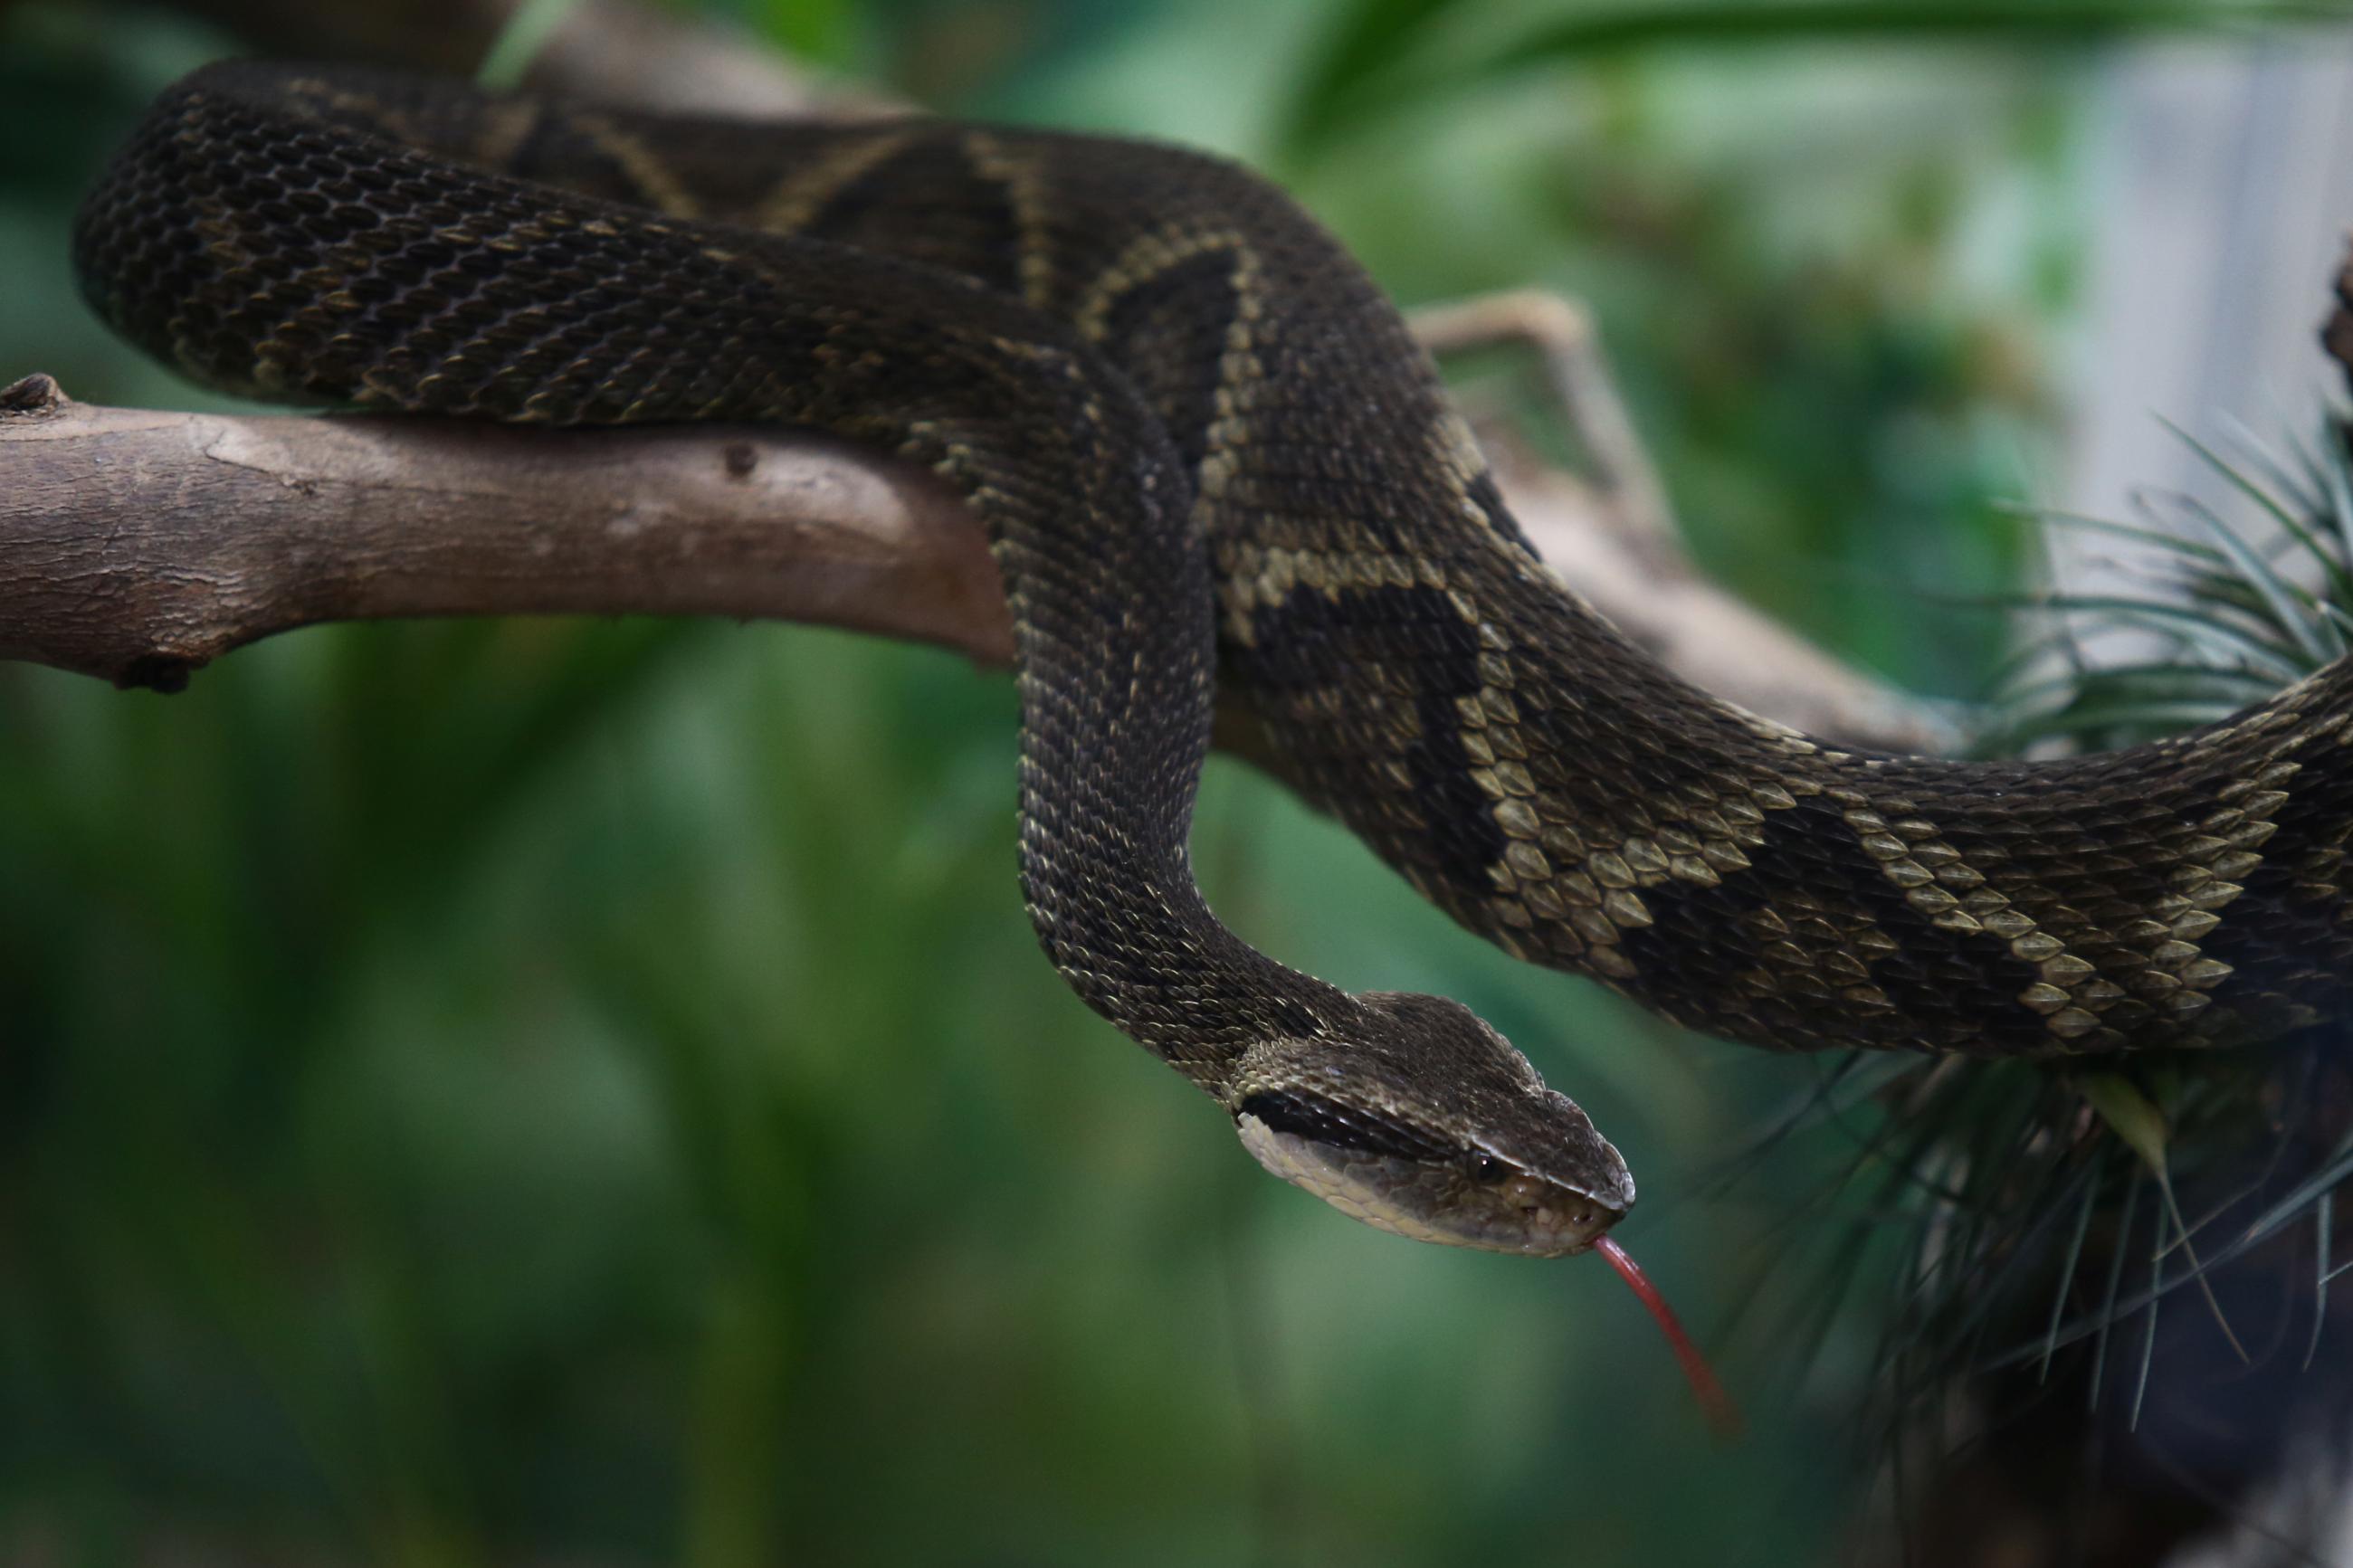 A jararaca snake is seen at the Butantan Institute.